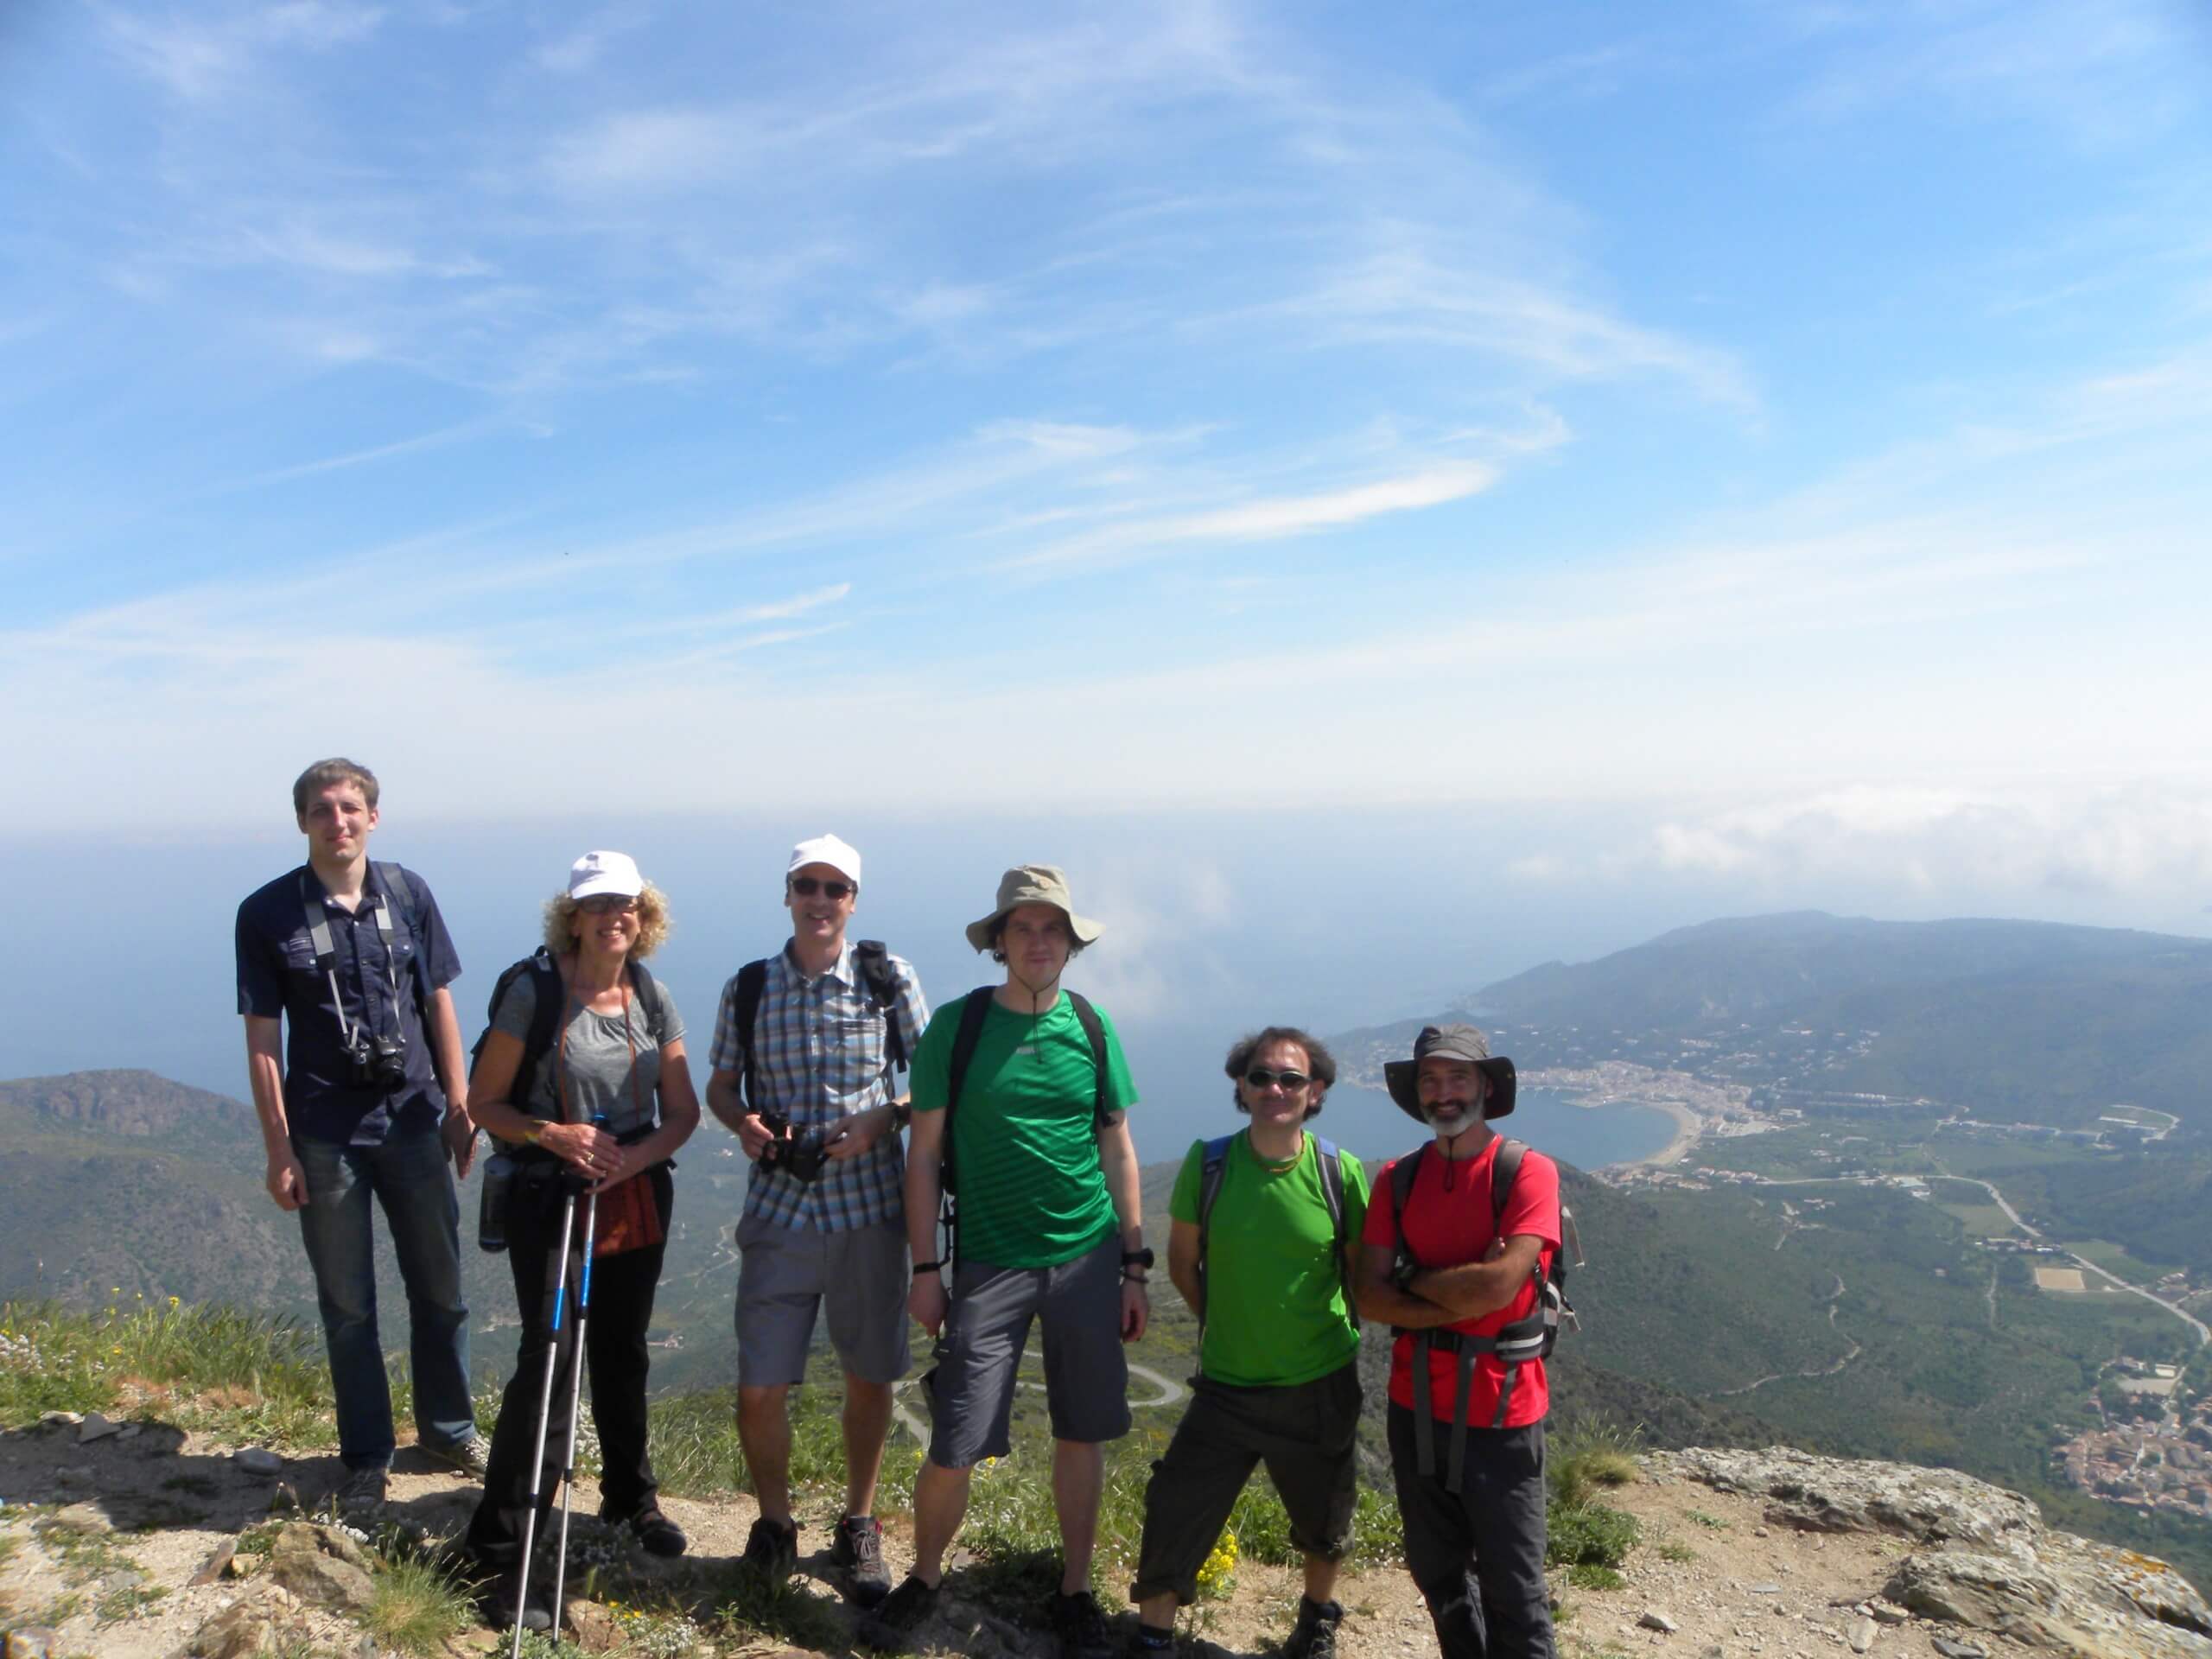 Group of hikers posing in Costa Brava